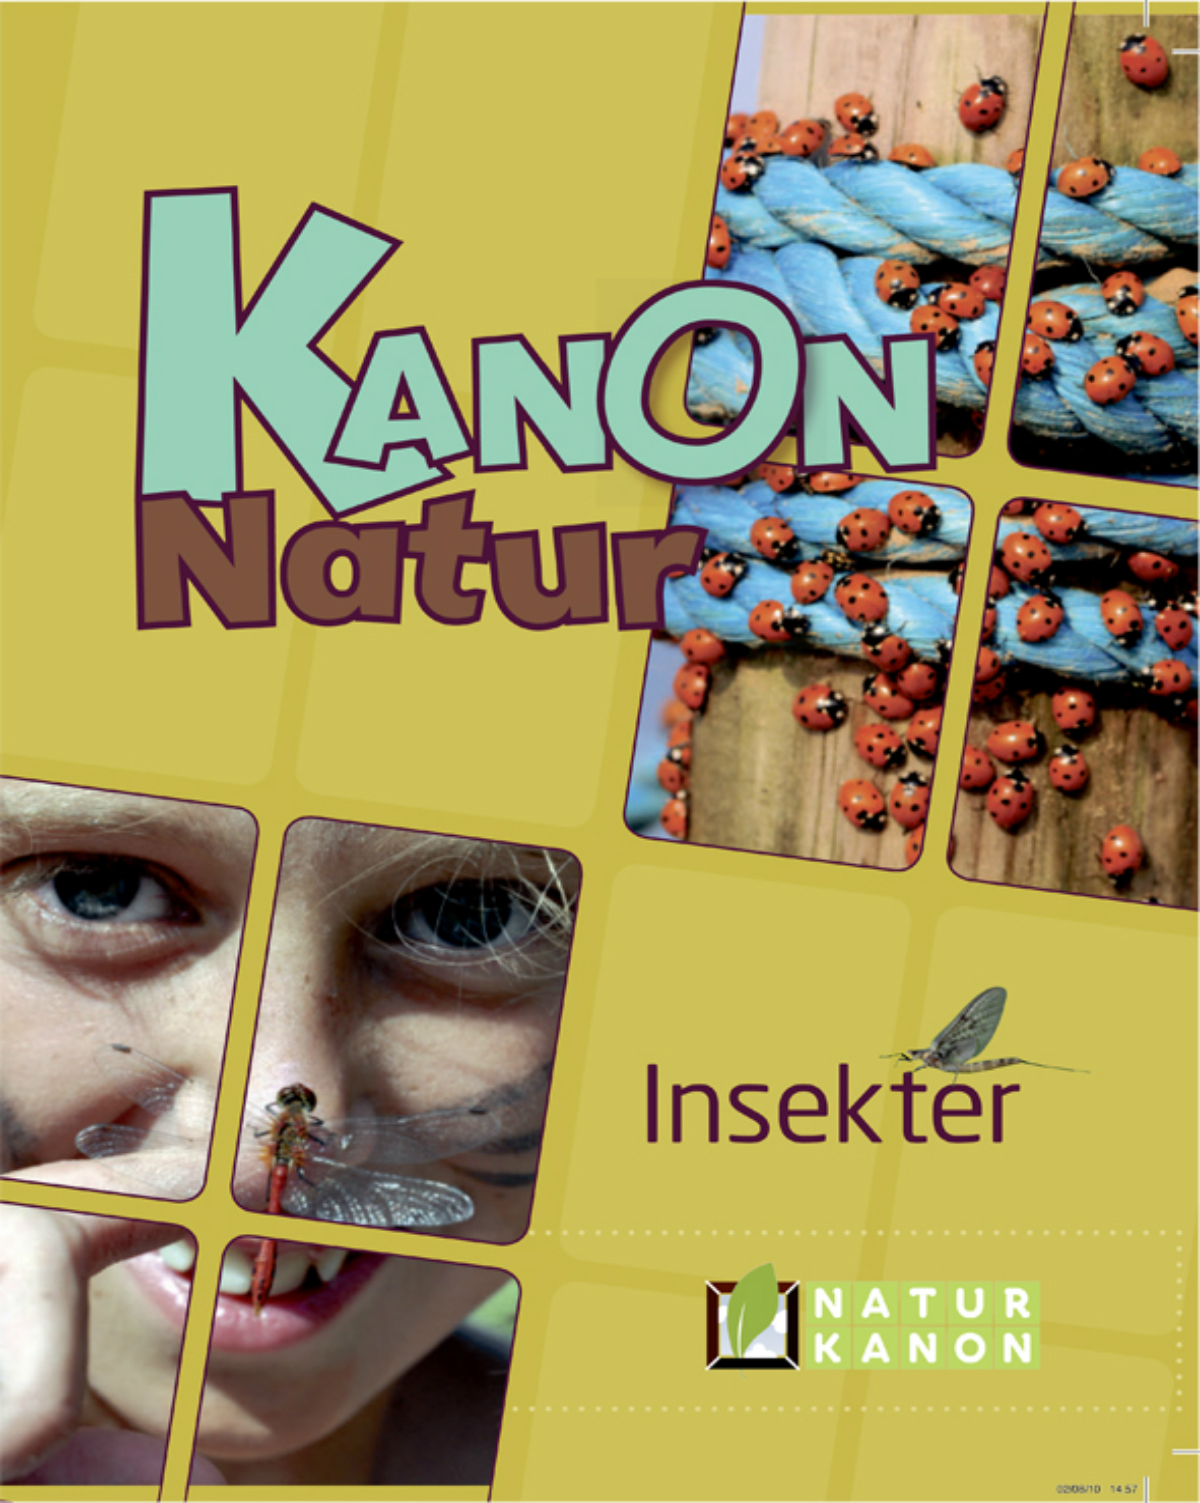 Undervisningsmaterialet Kanon natur om insekter